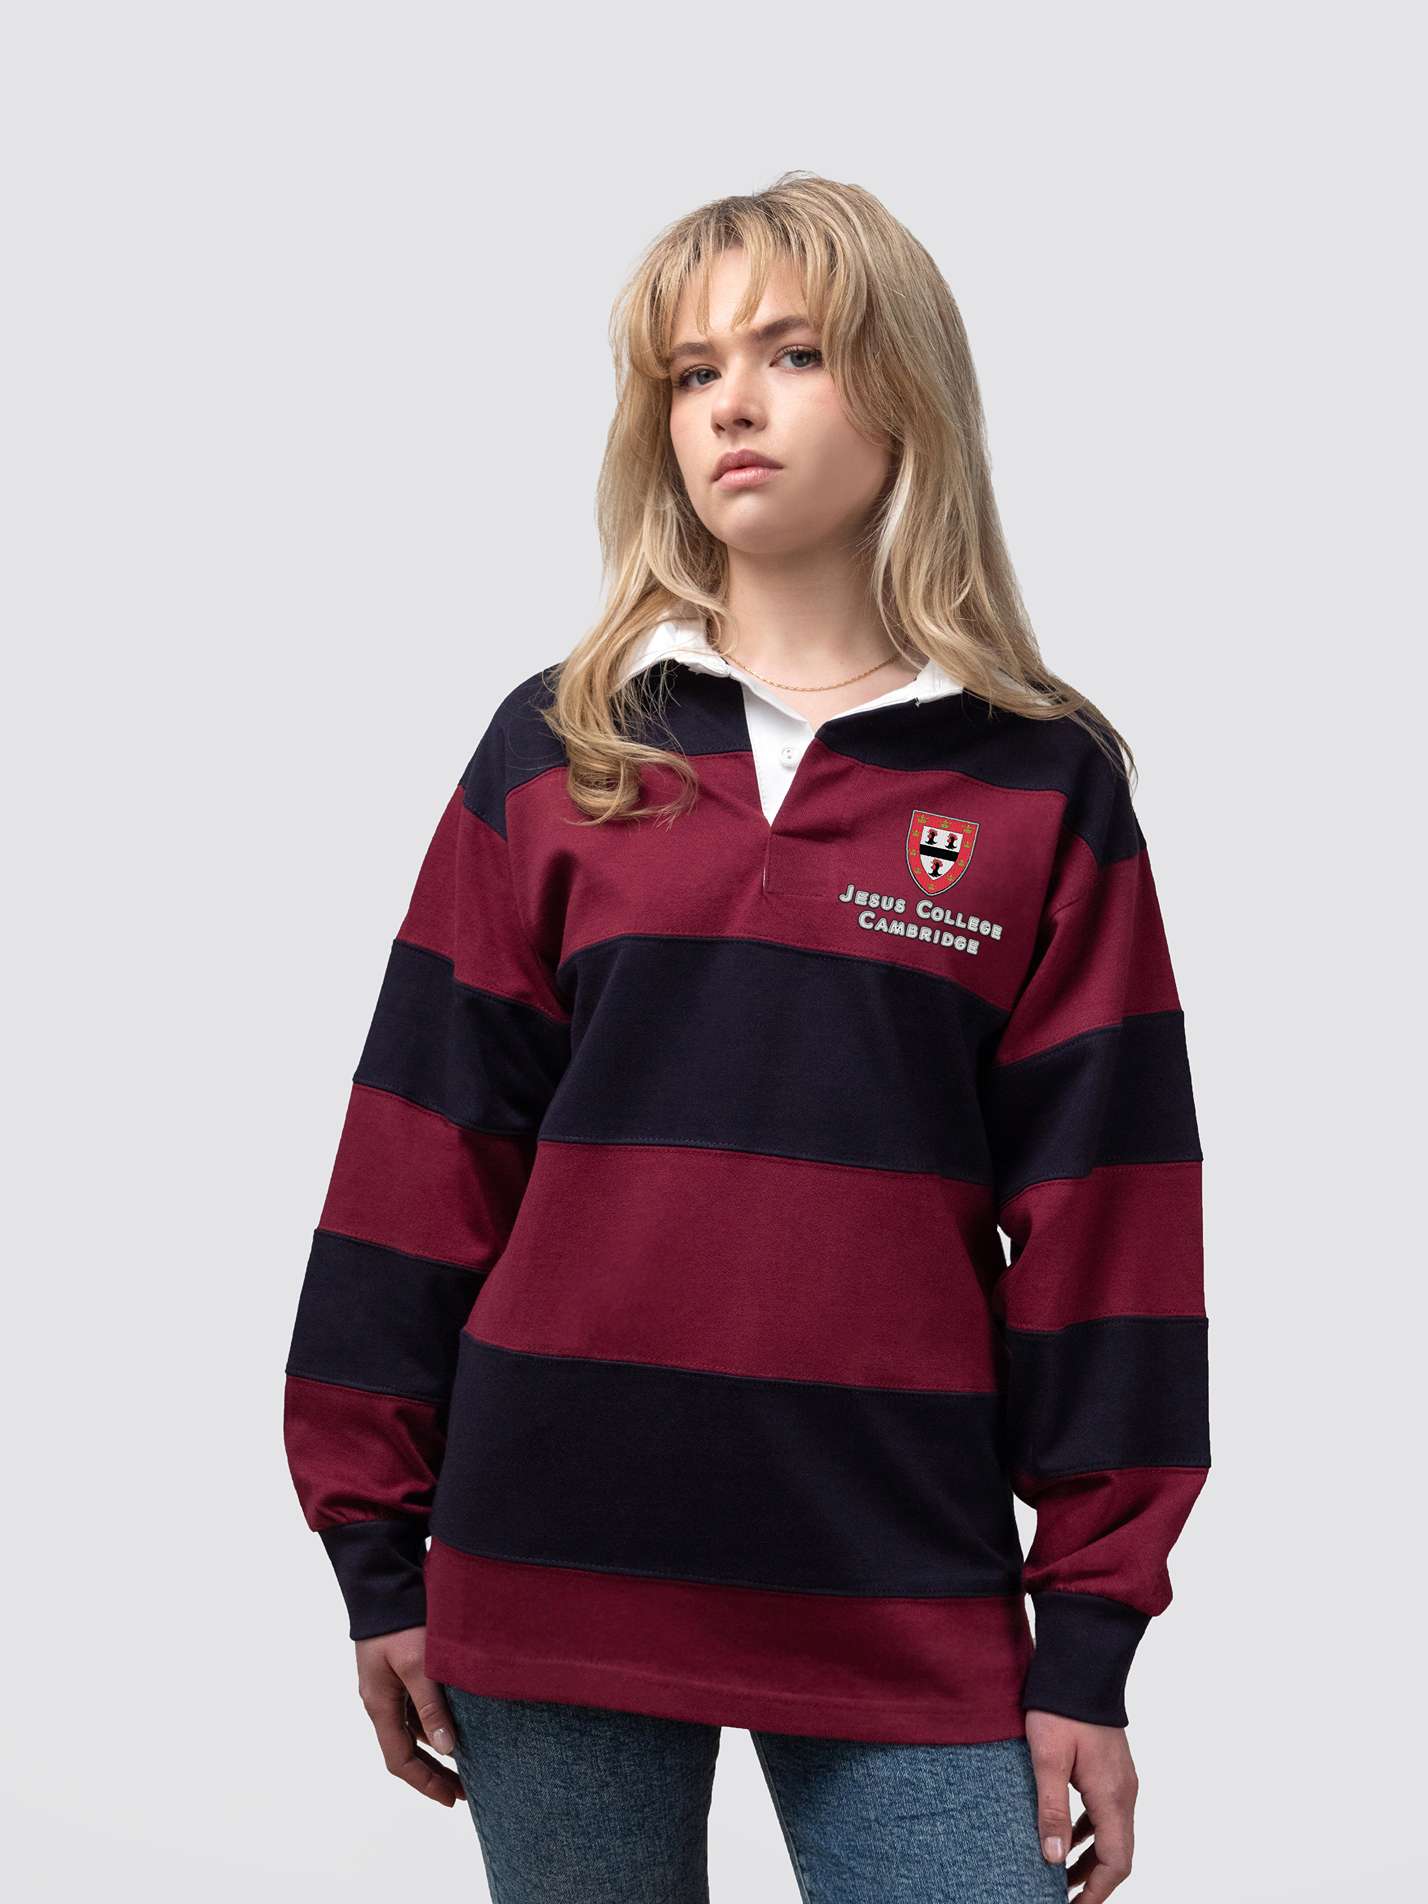 Jesus College Cambridge JCR Unisex Striped Rugby Shirt